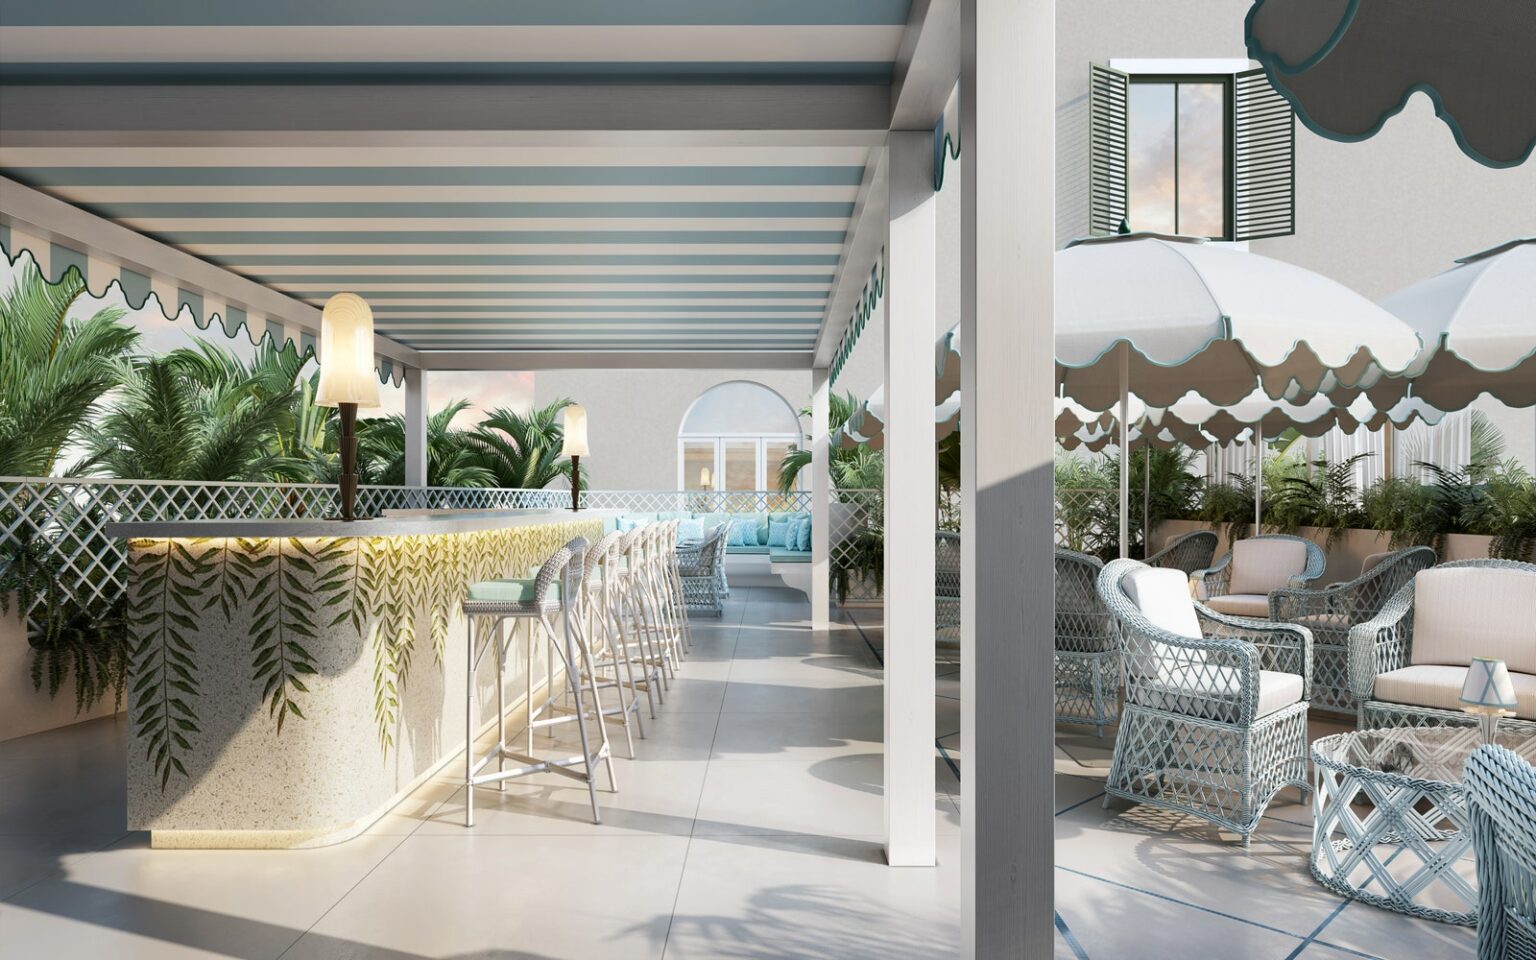 Step Inside Hotel Du Cap-Eden-Roc Owner’s Stunning New Hotel In Capri